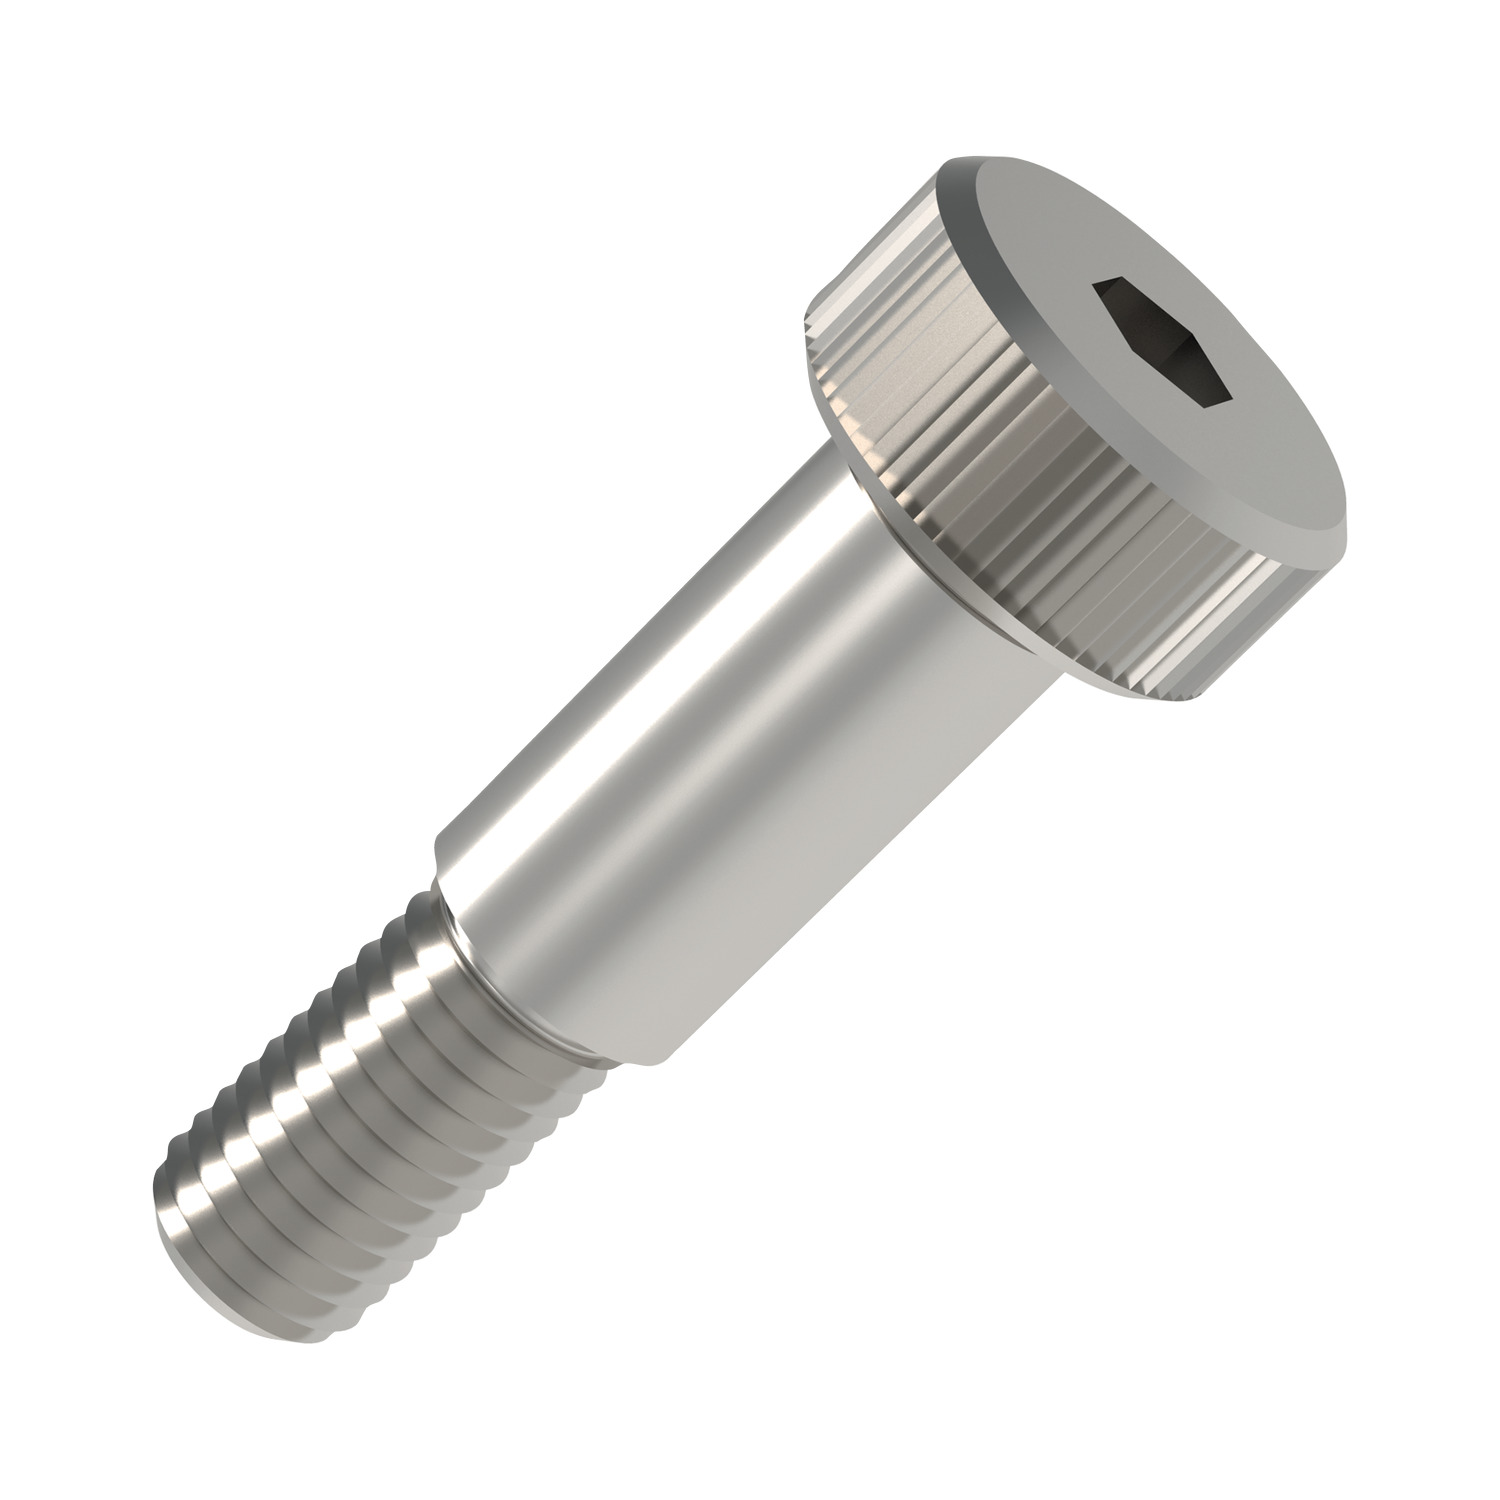 Shoulder Screws - Hex. Socket Head Large shoulder screws with thread sizes M3 - M16 and shoulder lengths 4 - 140mm to meet ISO 7379.